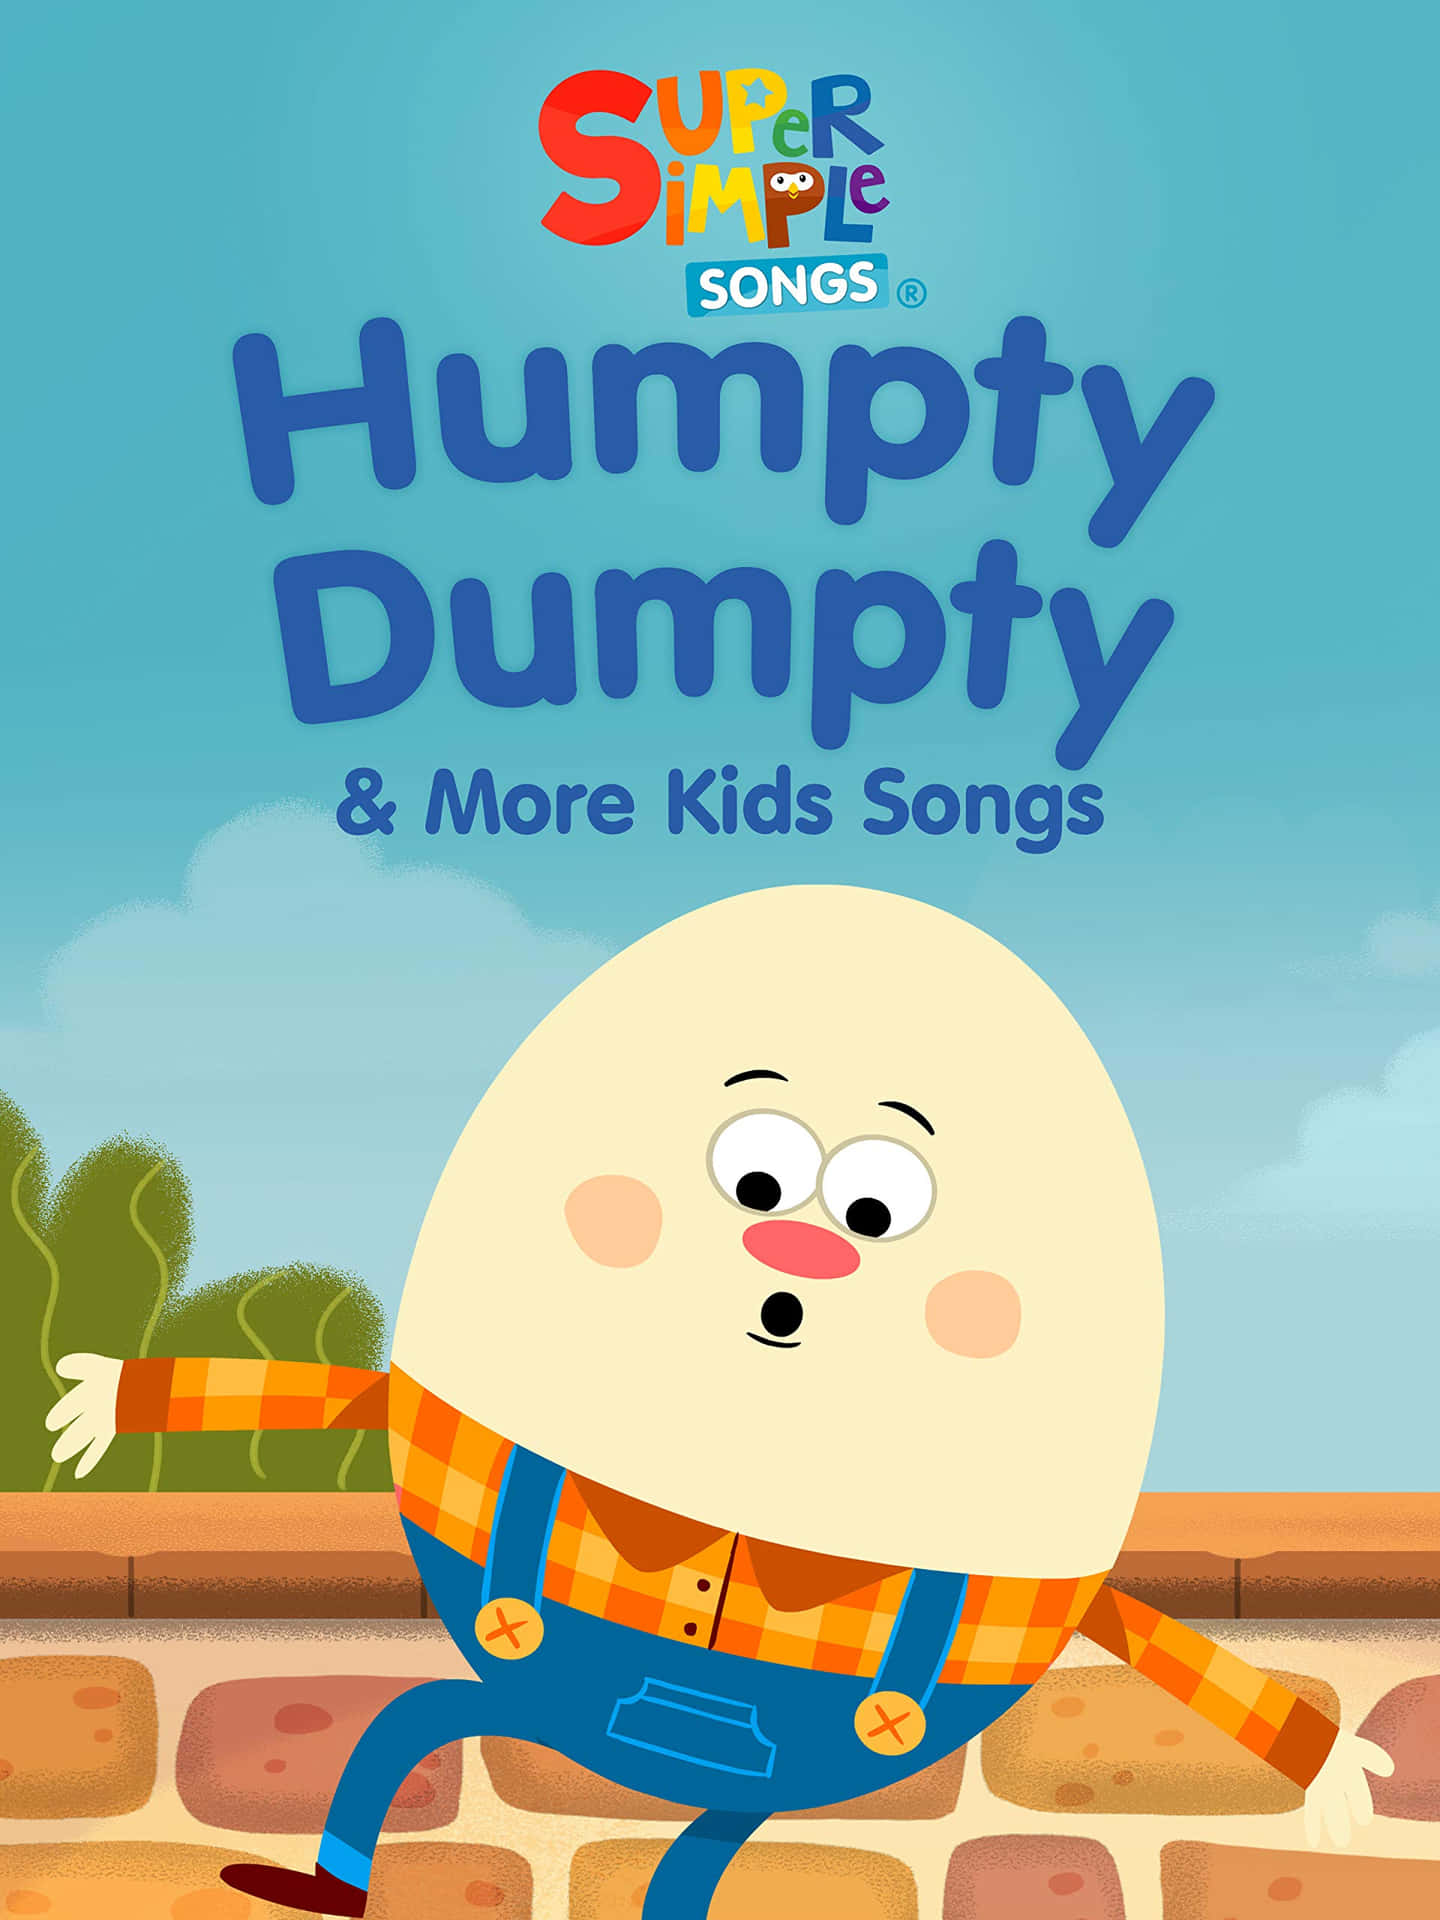 Charming illustration of Humpty Dumpty Sitting on a Wall